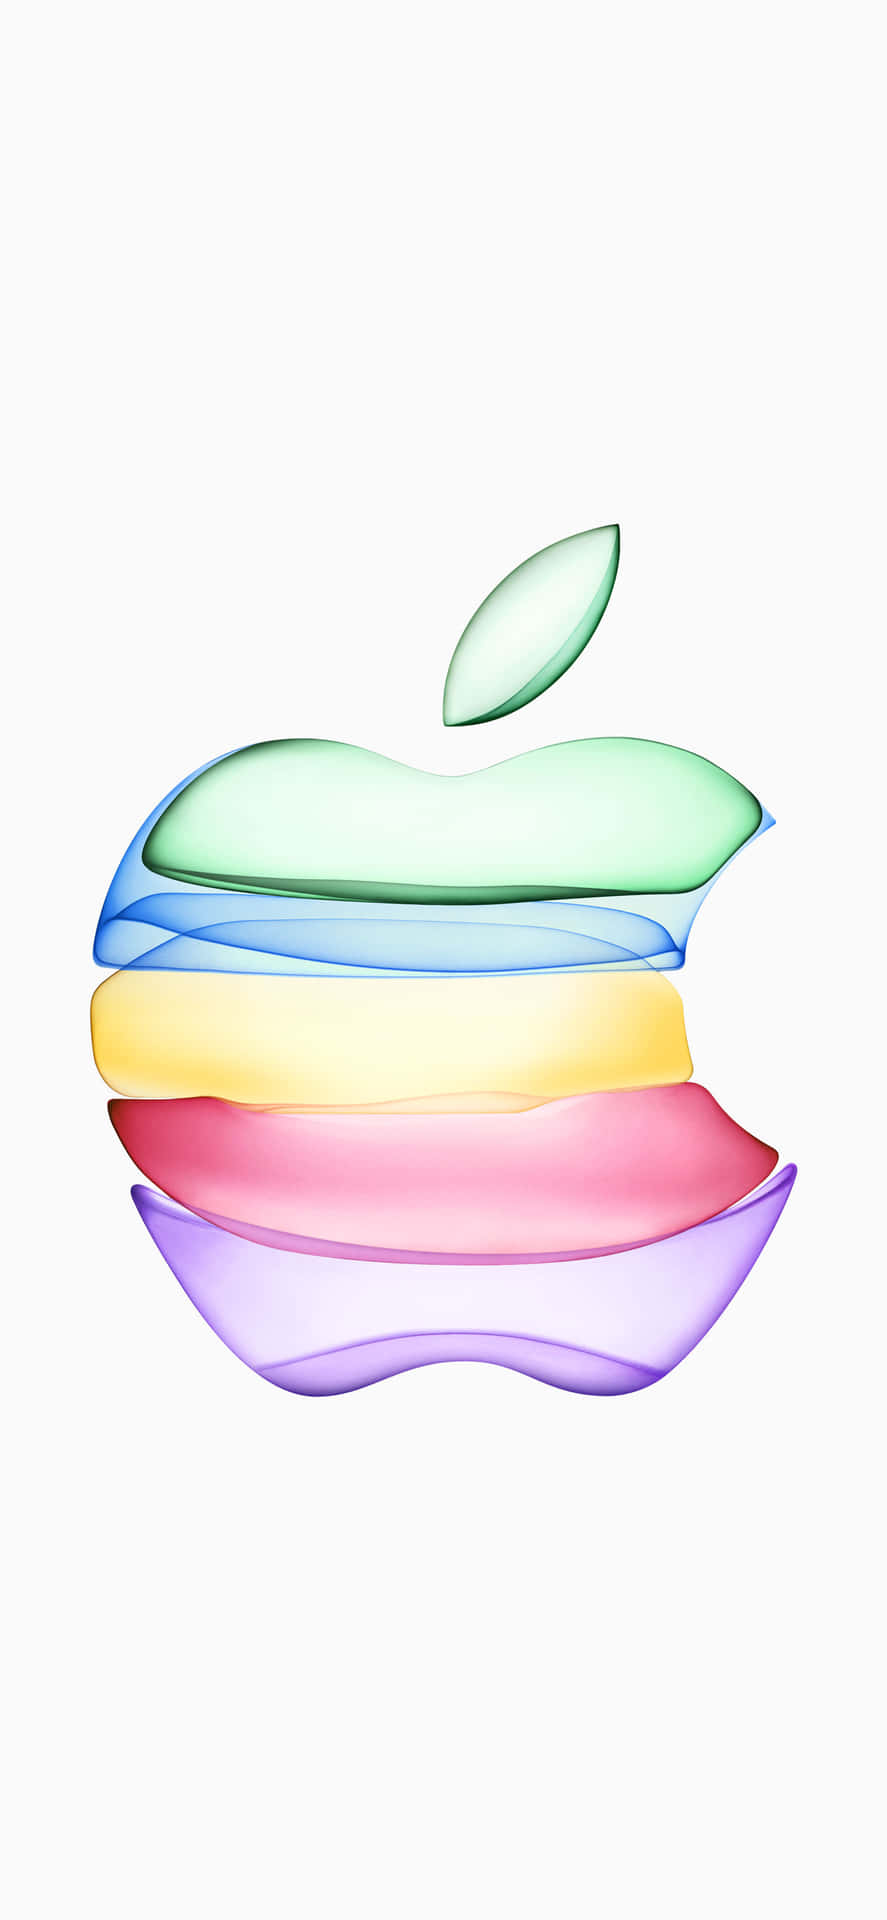 IPhones XS Max Rainbow Apple Logo Wallpaper